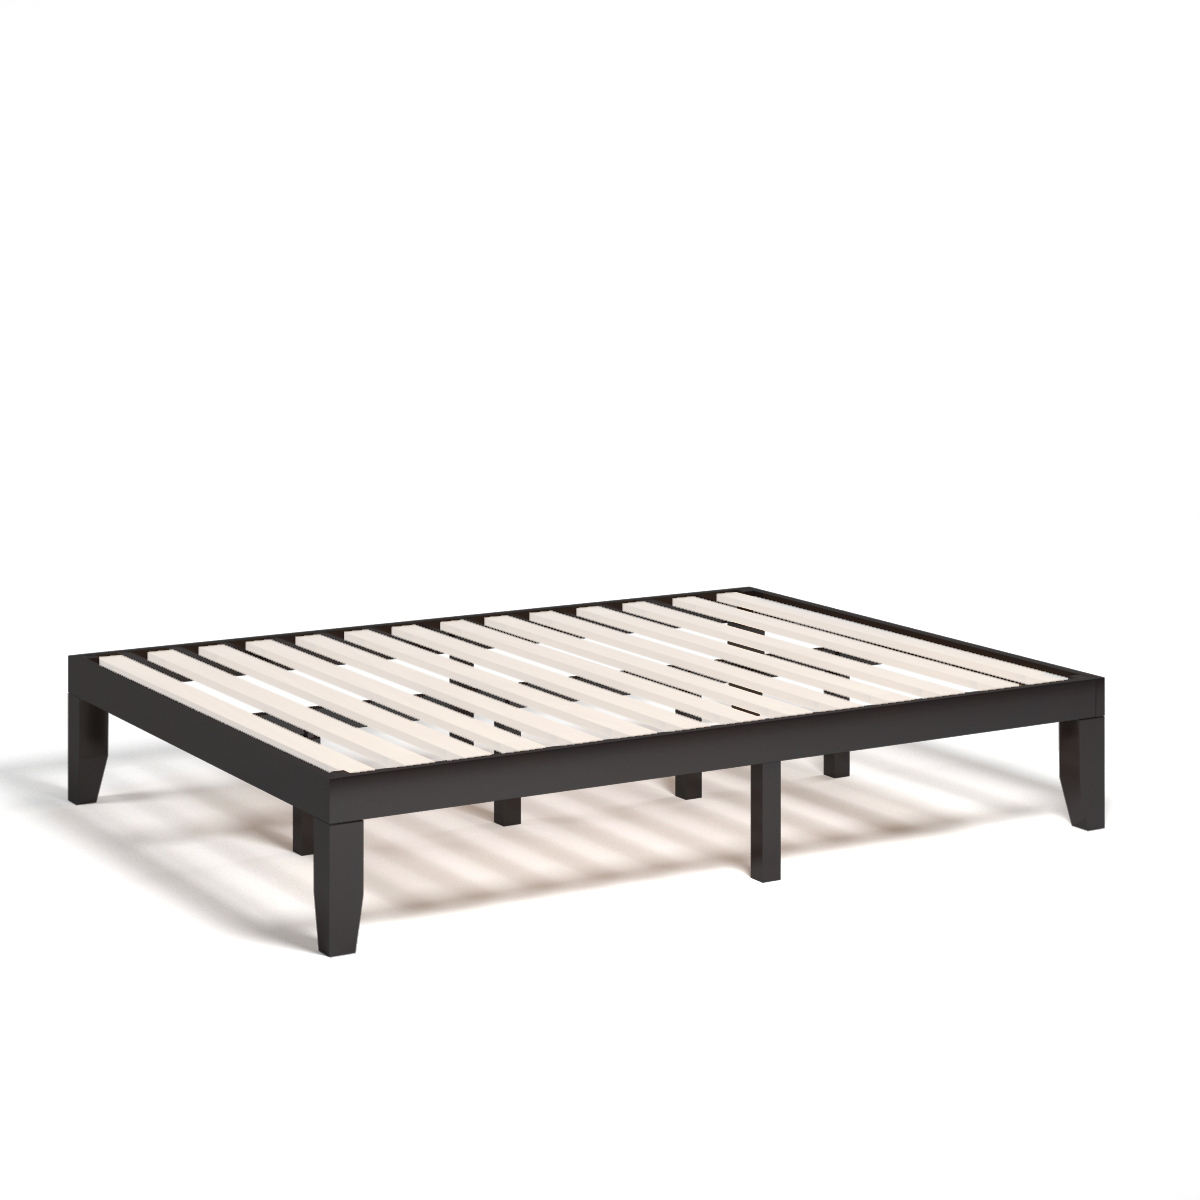 14'' Queen Size Wooden Platform Bed Frame W/ Strong Slat Support - Espresso